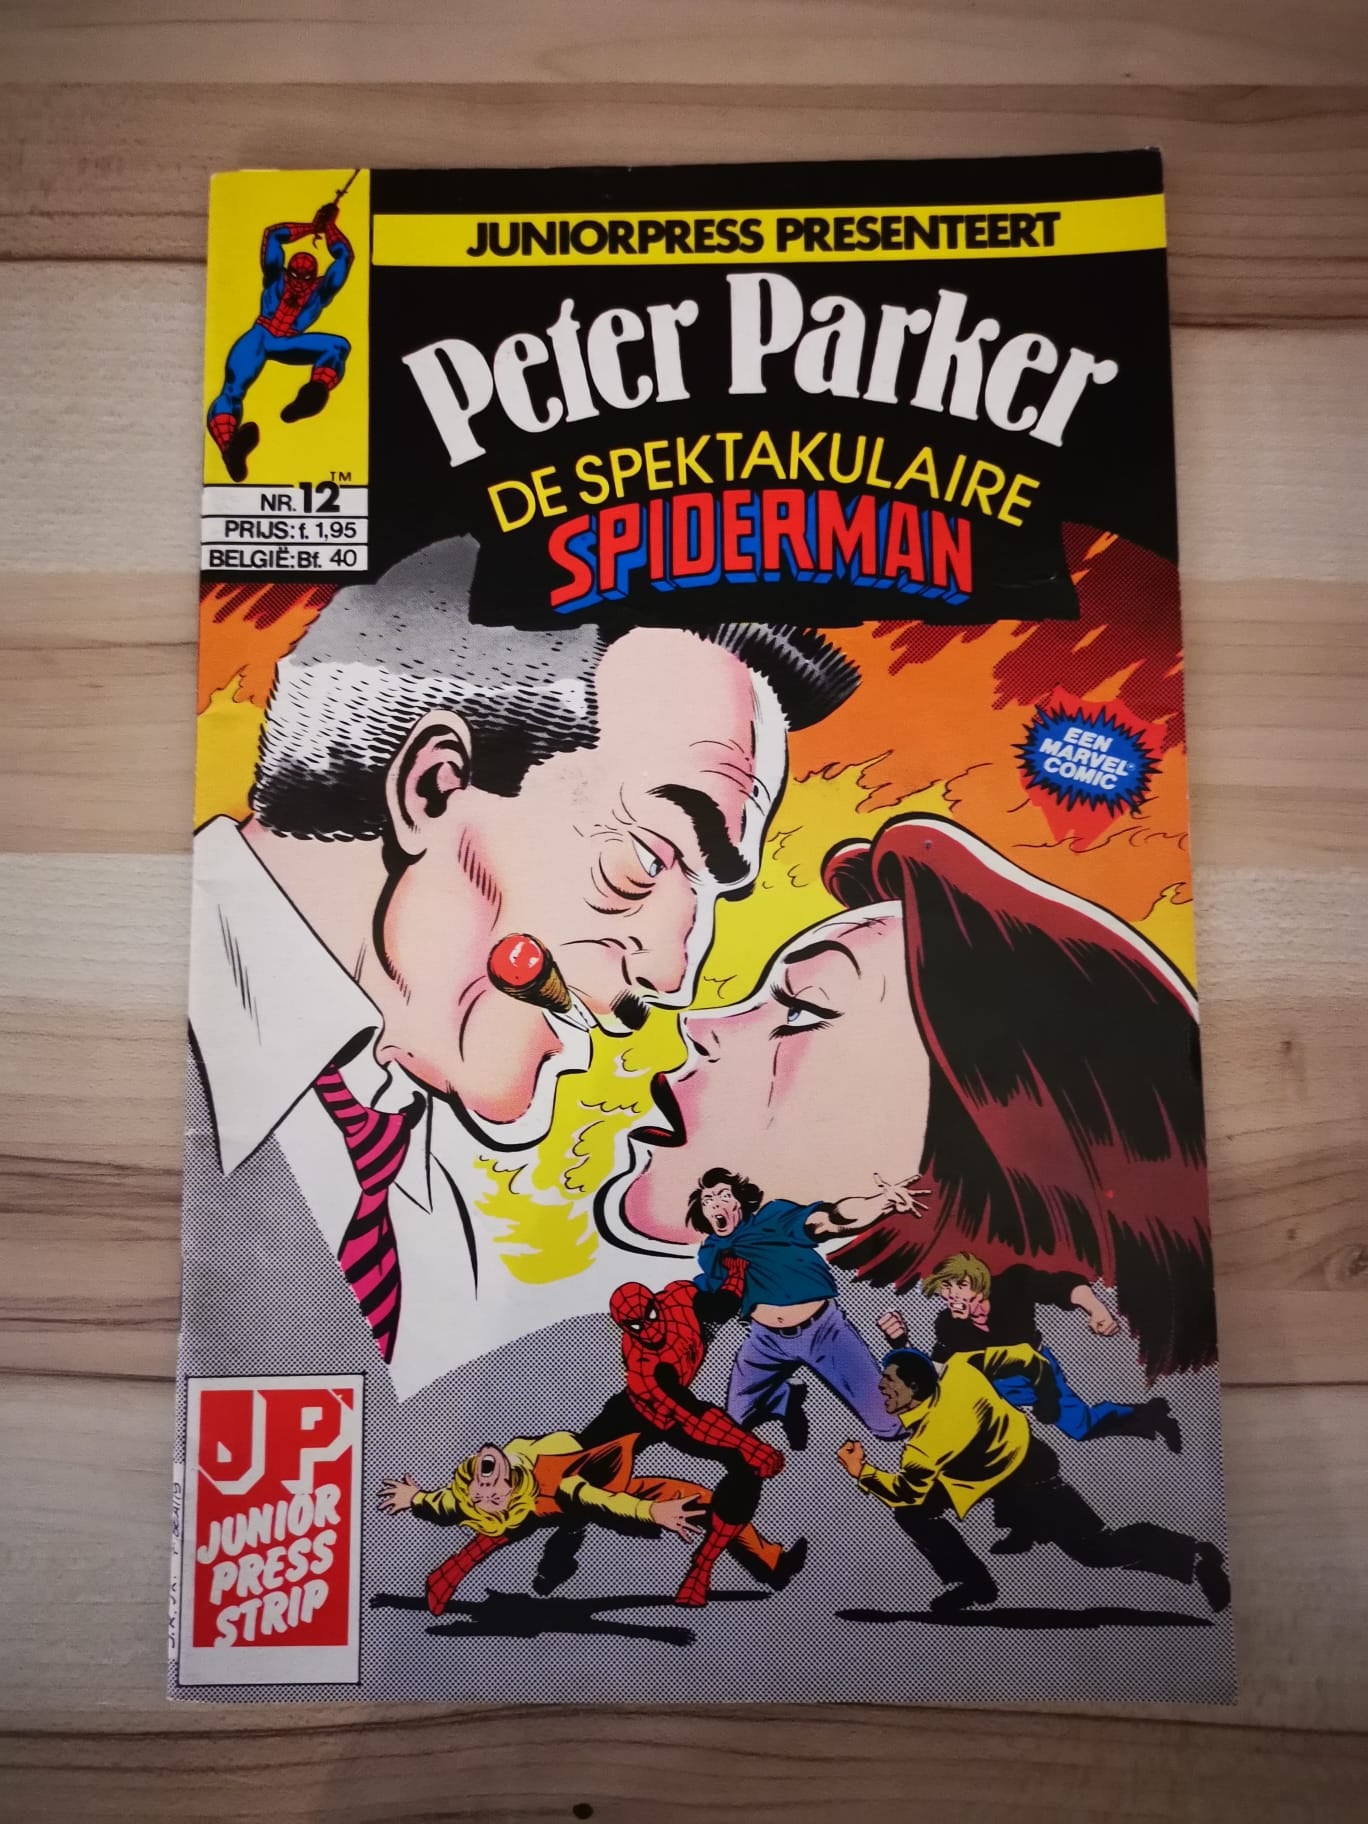 Peter Parker De spektakulaire spiderman #12